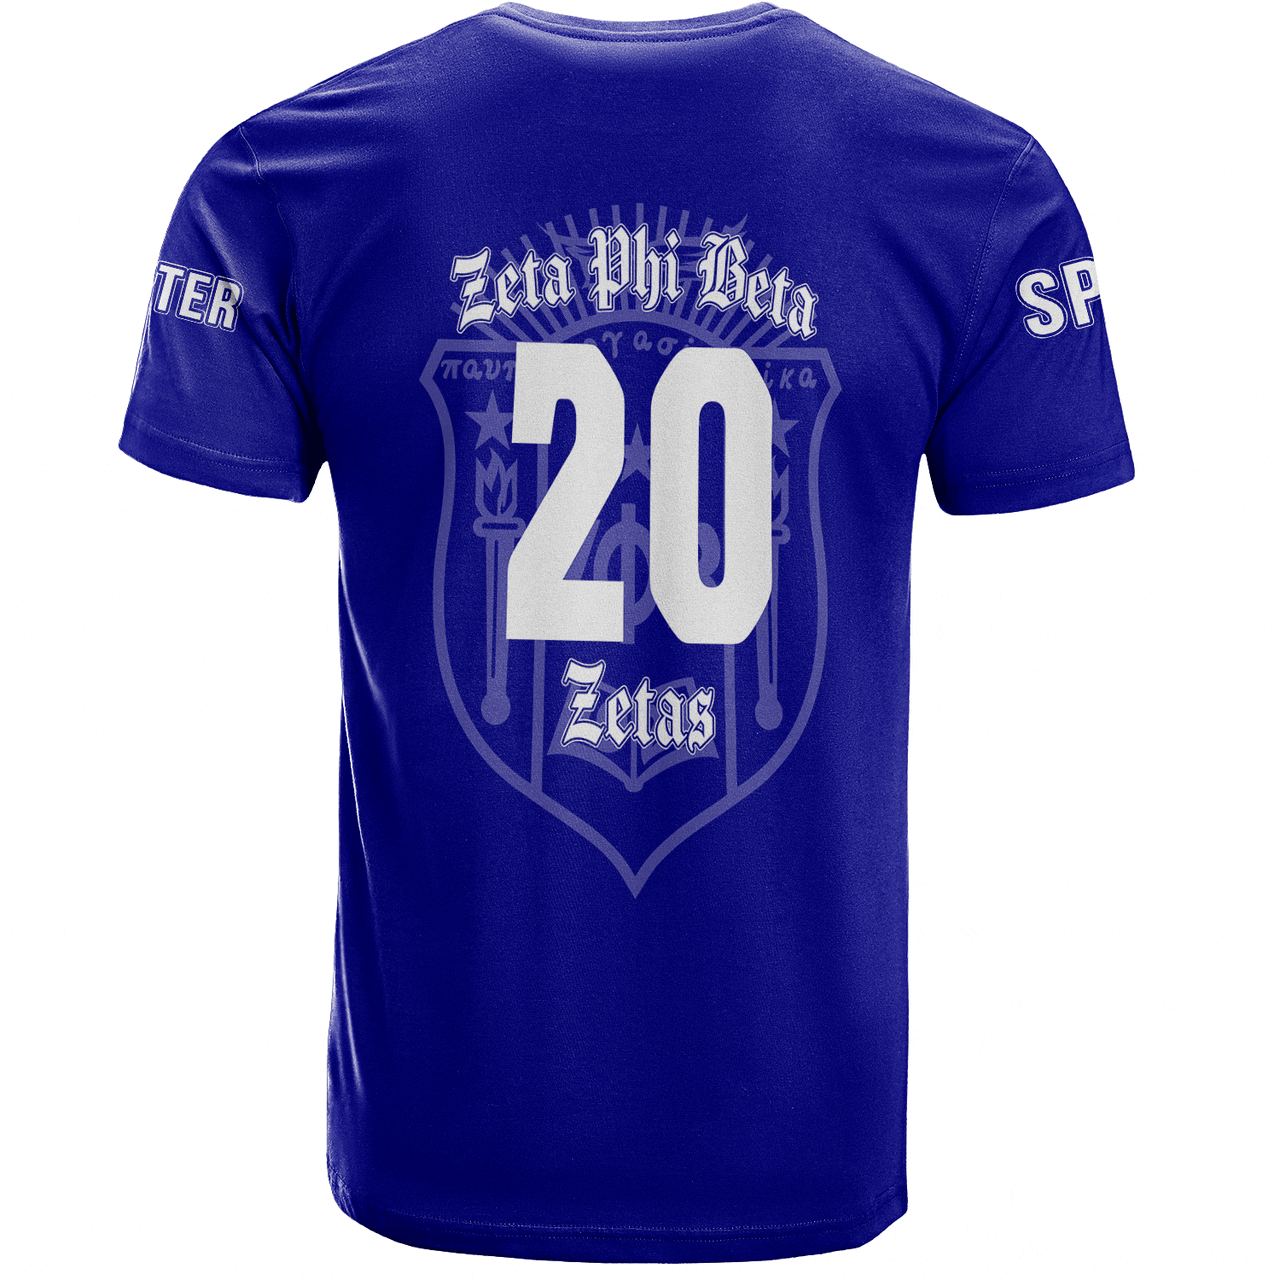 Zeta Phi Beta T-Shirt Custom Chapter And Spring Style